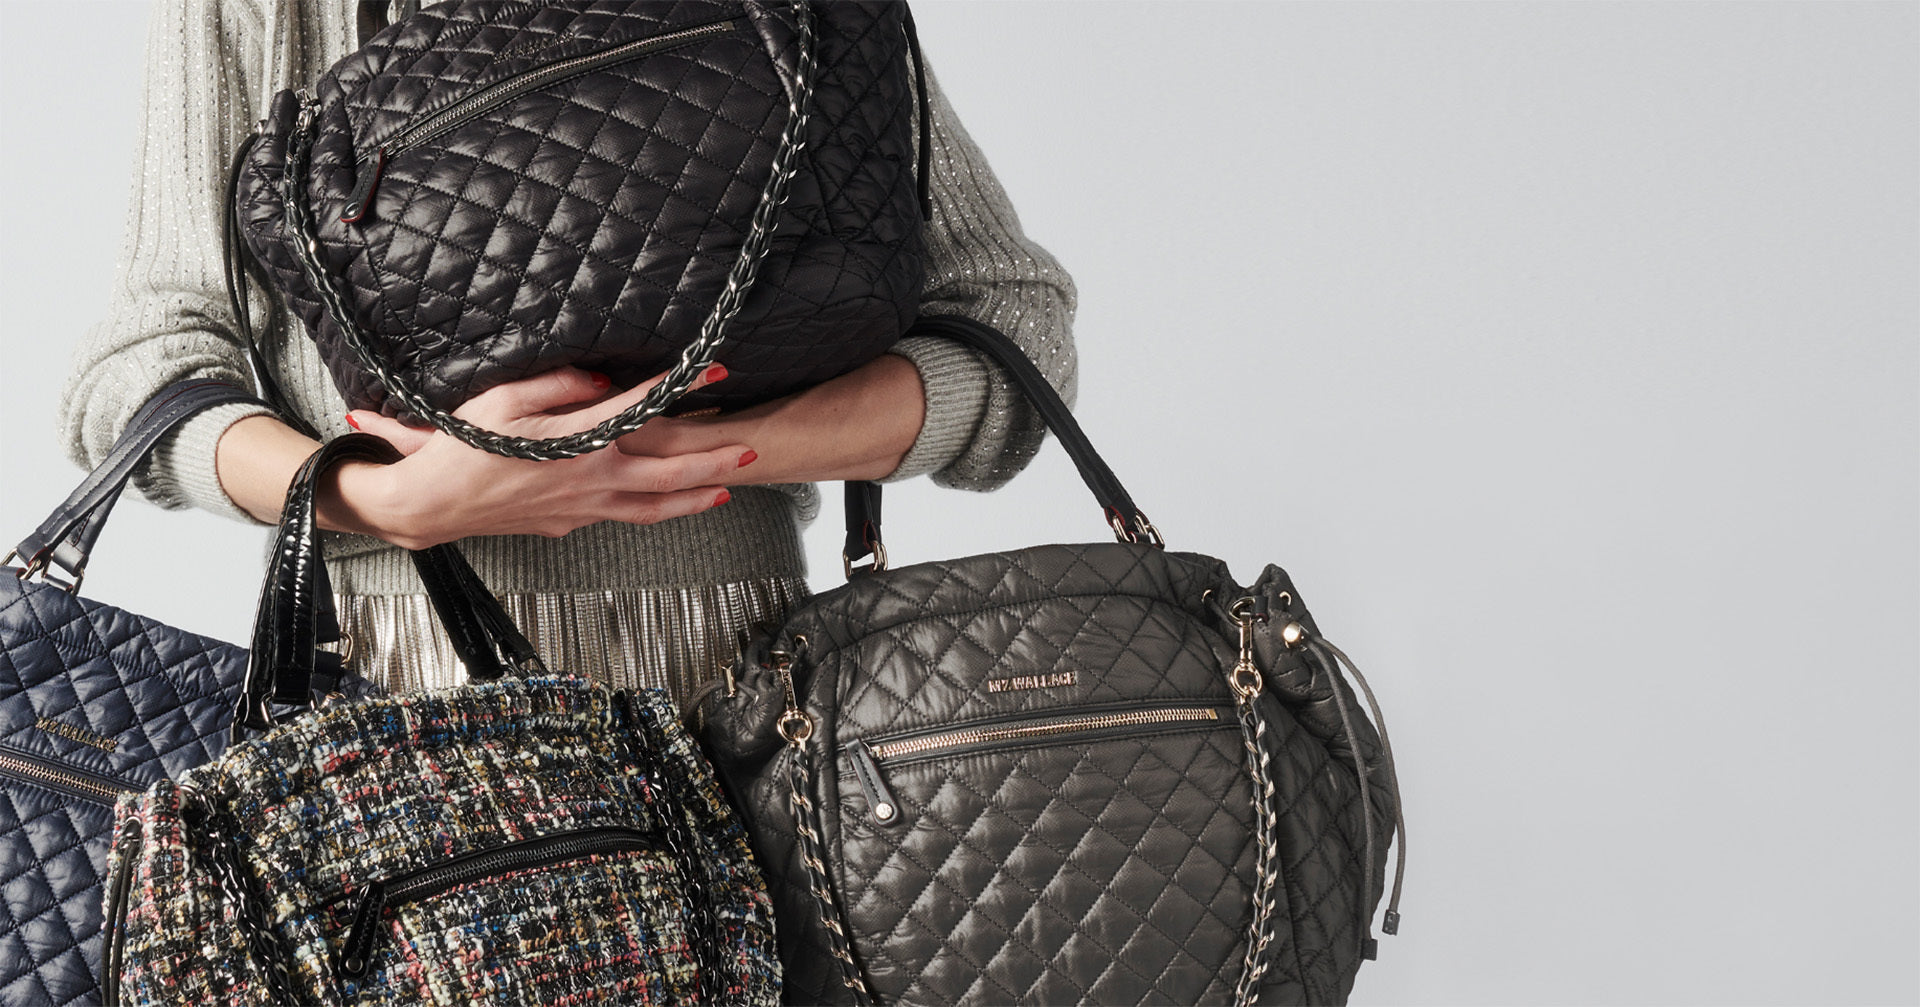 Mono - Luxury Handbag Accessories - Handbag Liners / Organisers